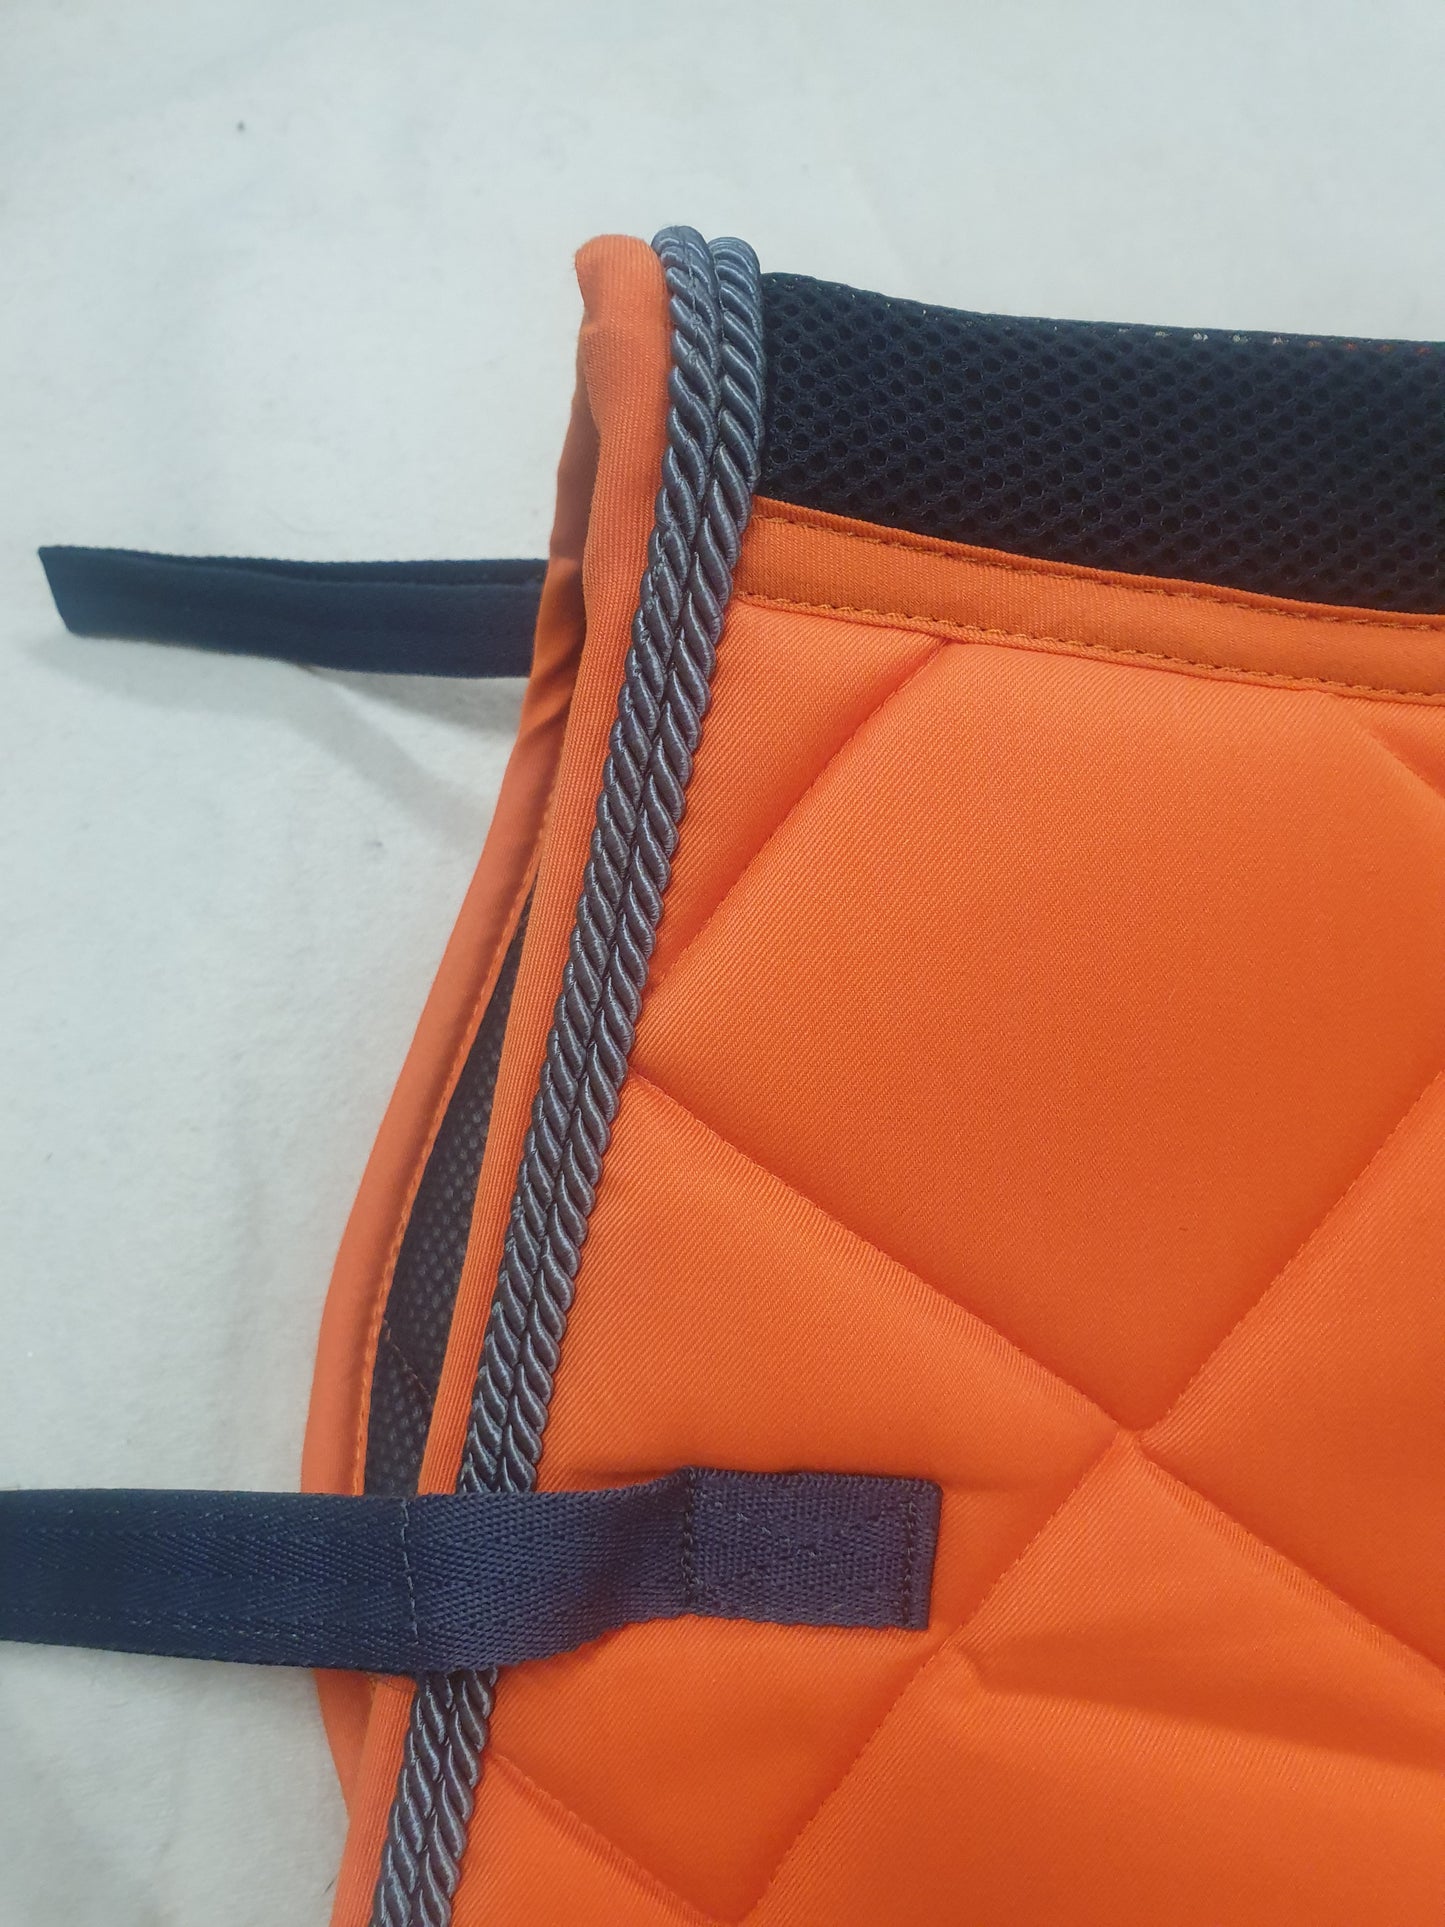 NEW rhinegold elite carnival saddle pad, cob size, tangerine colour FREE POSTAGE 🟢